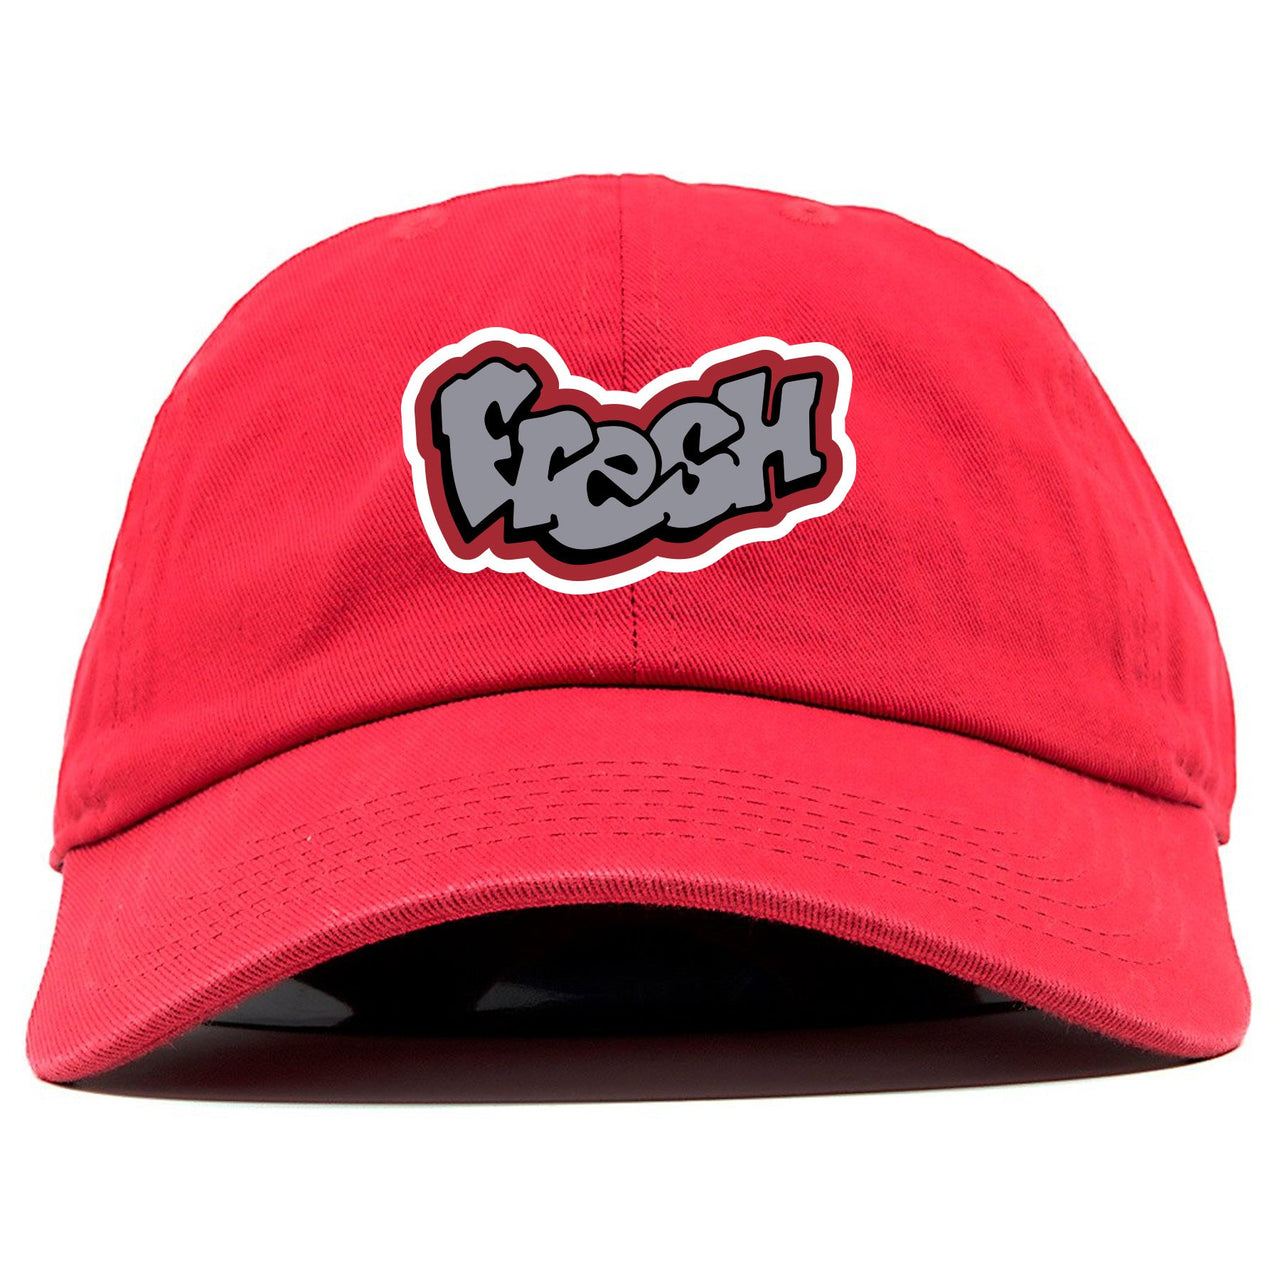 Bred 2019 4s Dad Hat | Fresh Logo, Red